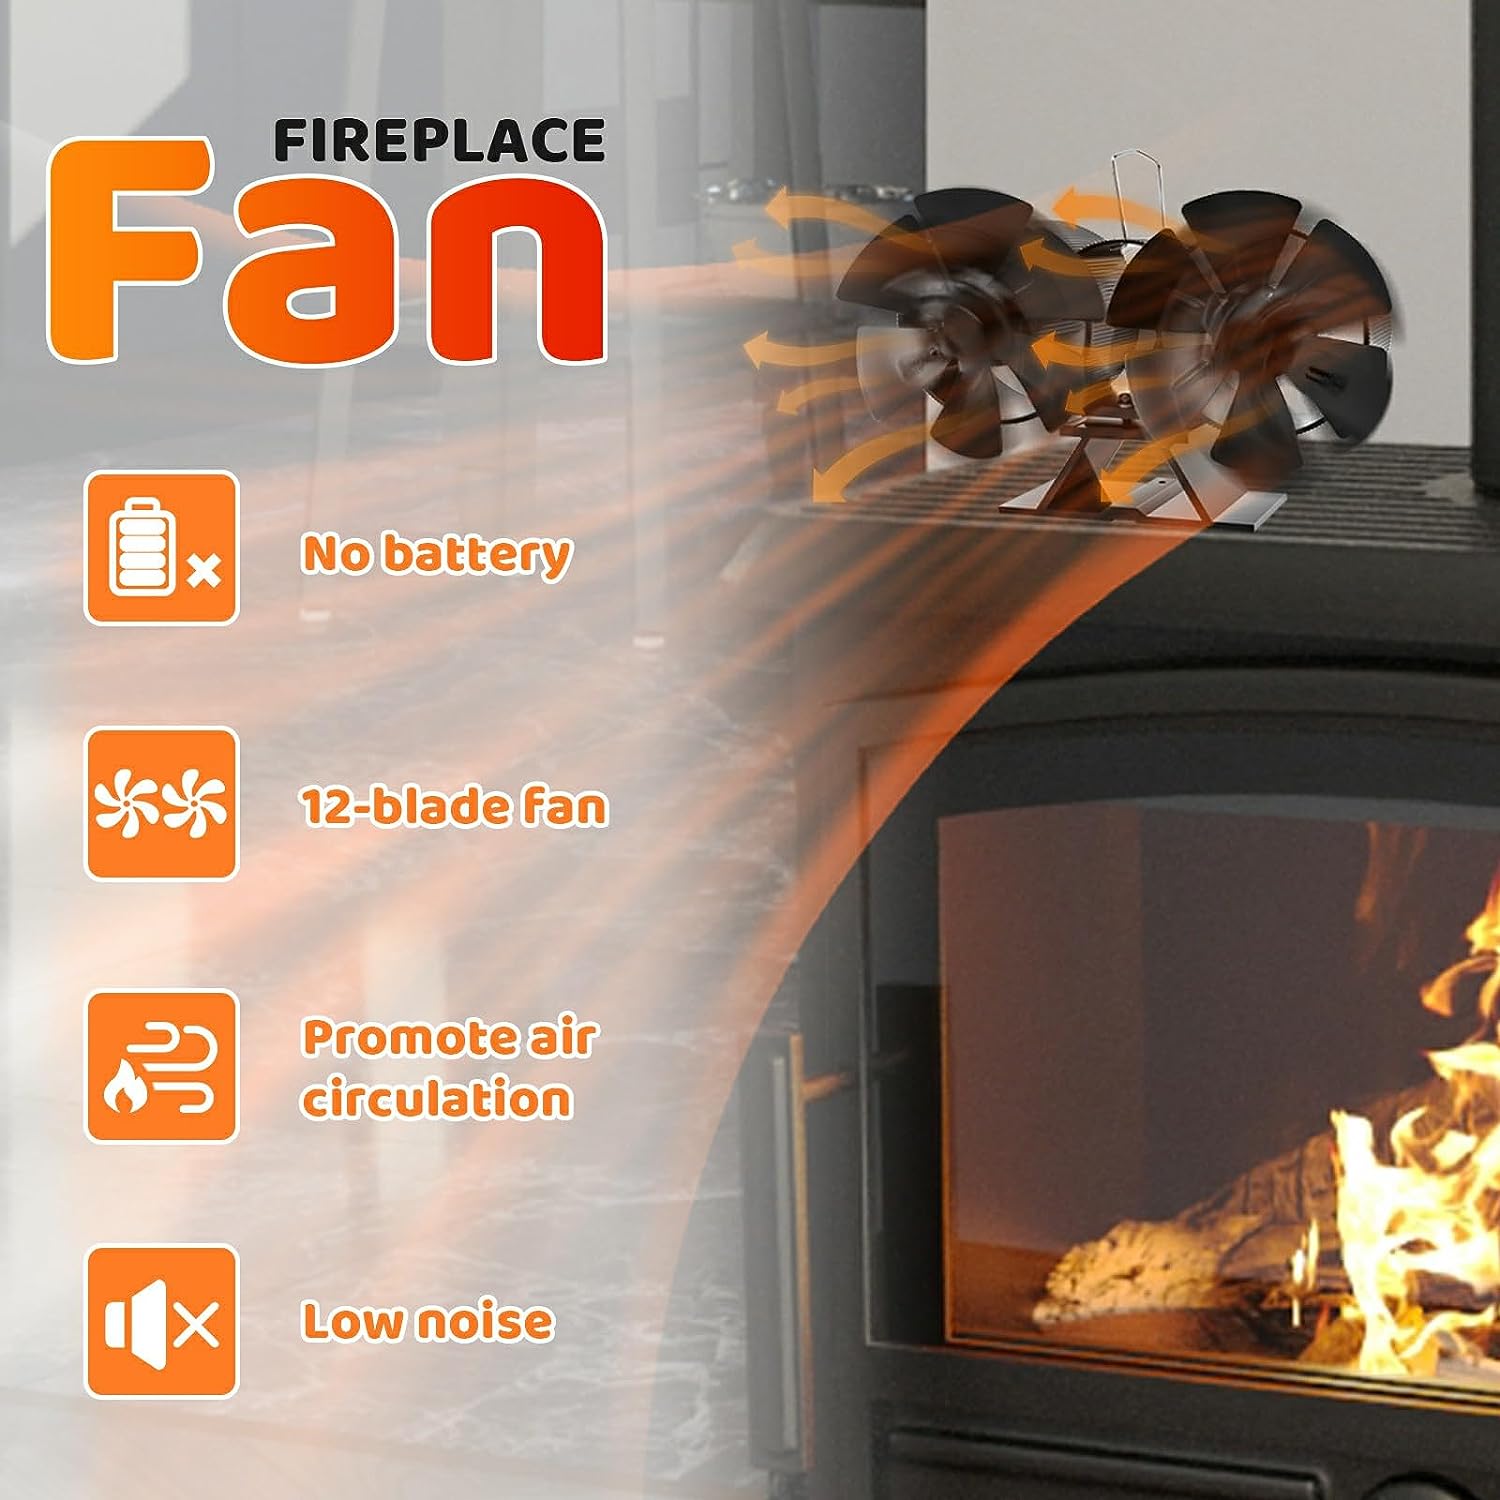 Log Burner Heat Powered Fan Wood Burning Stove Wood Stove Fan